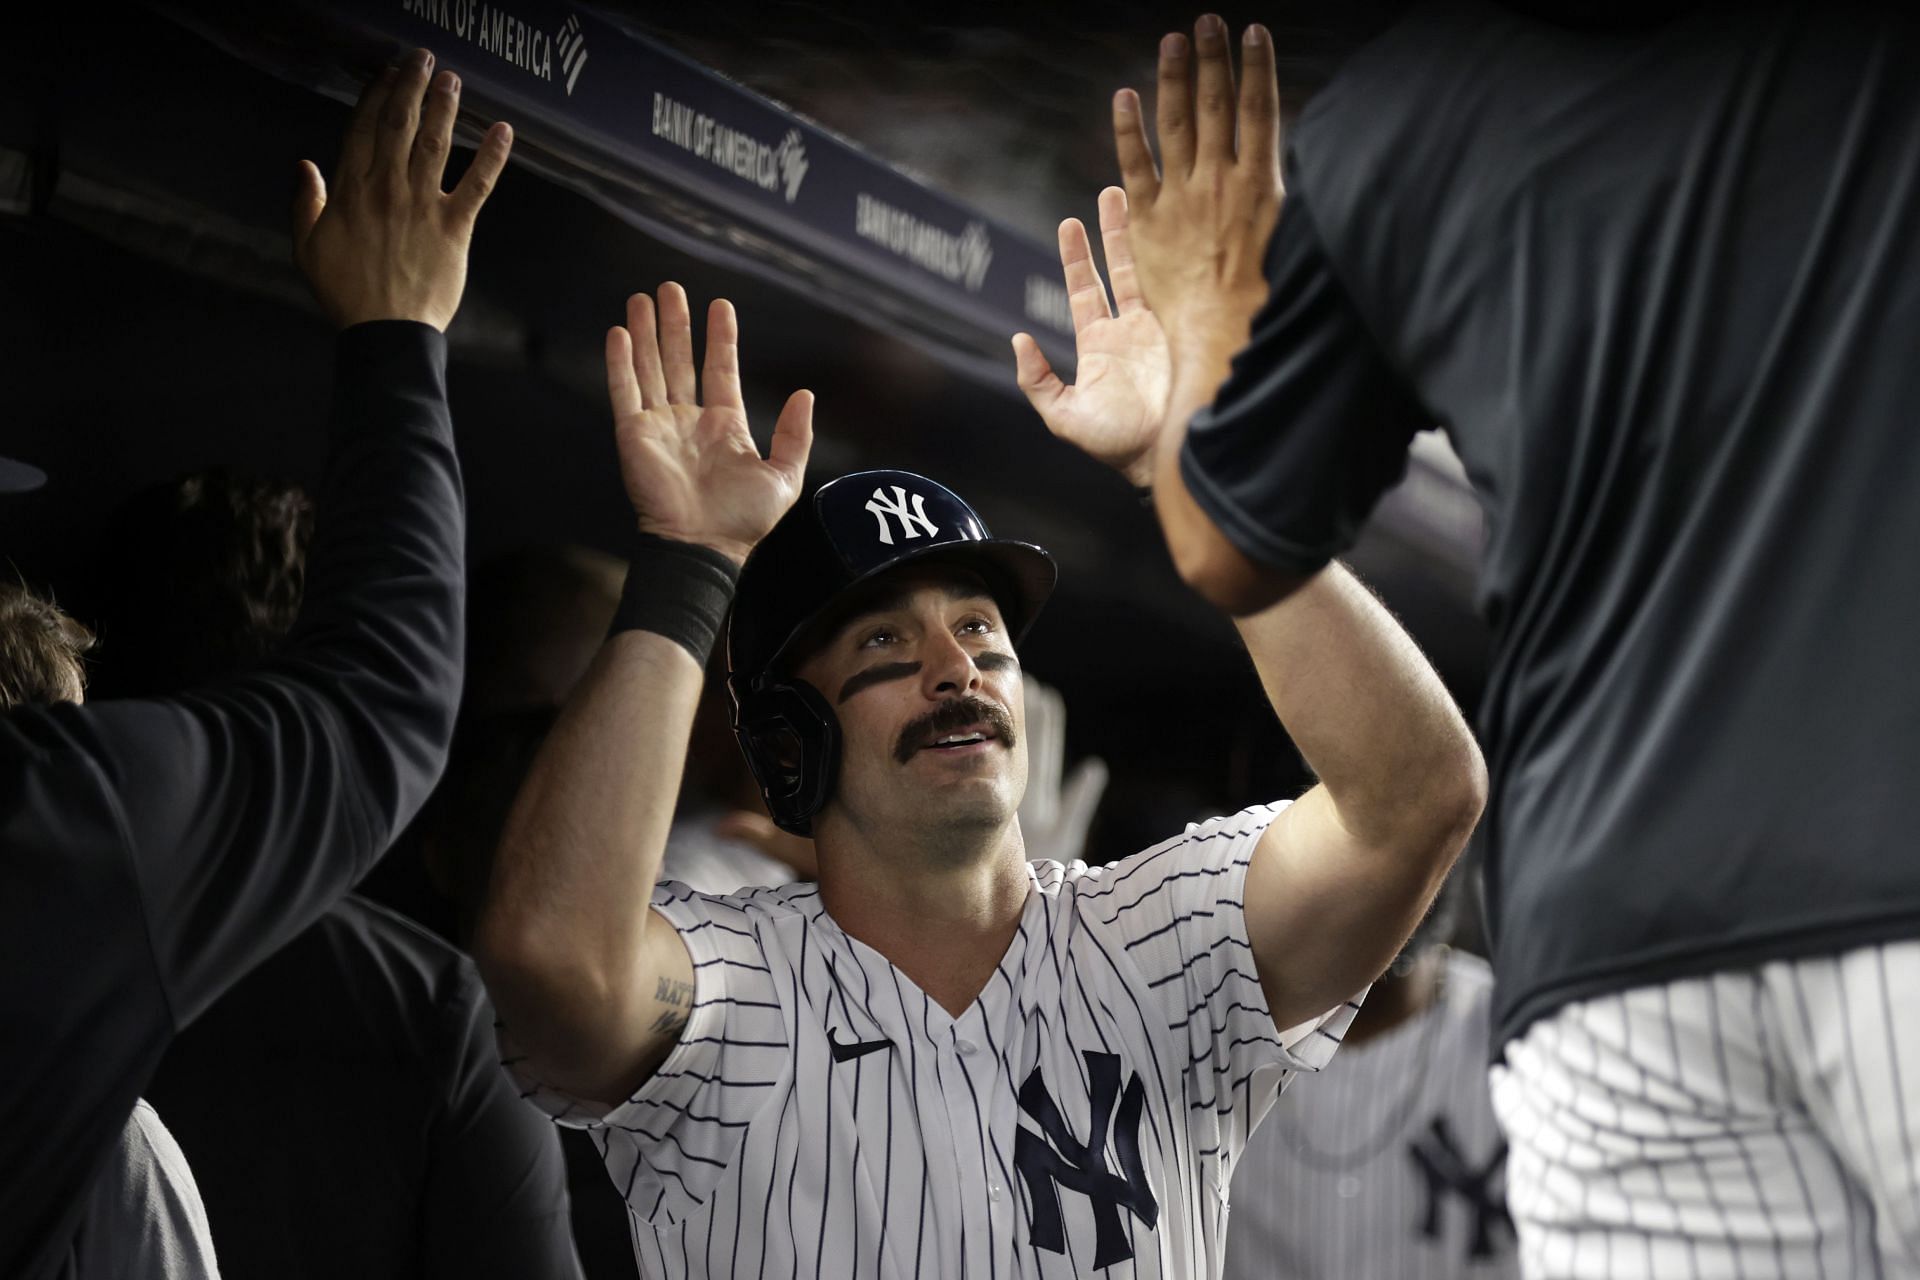 Matt Carpenter of the New York Yankees celebrates in the dugout.